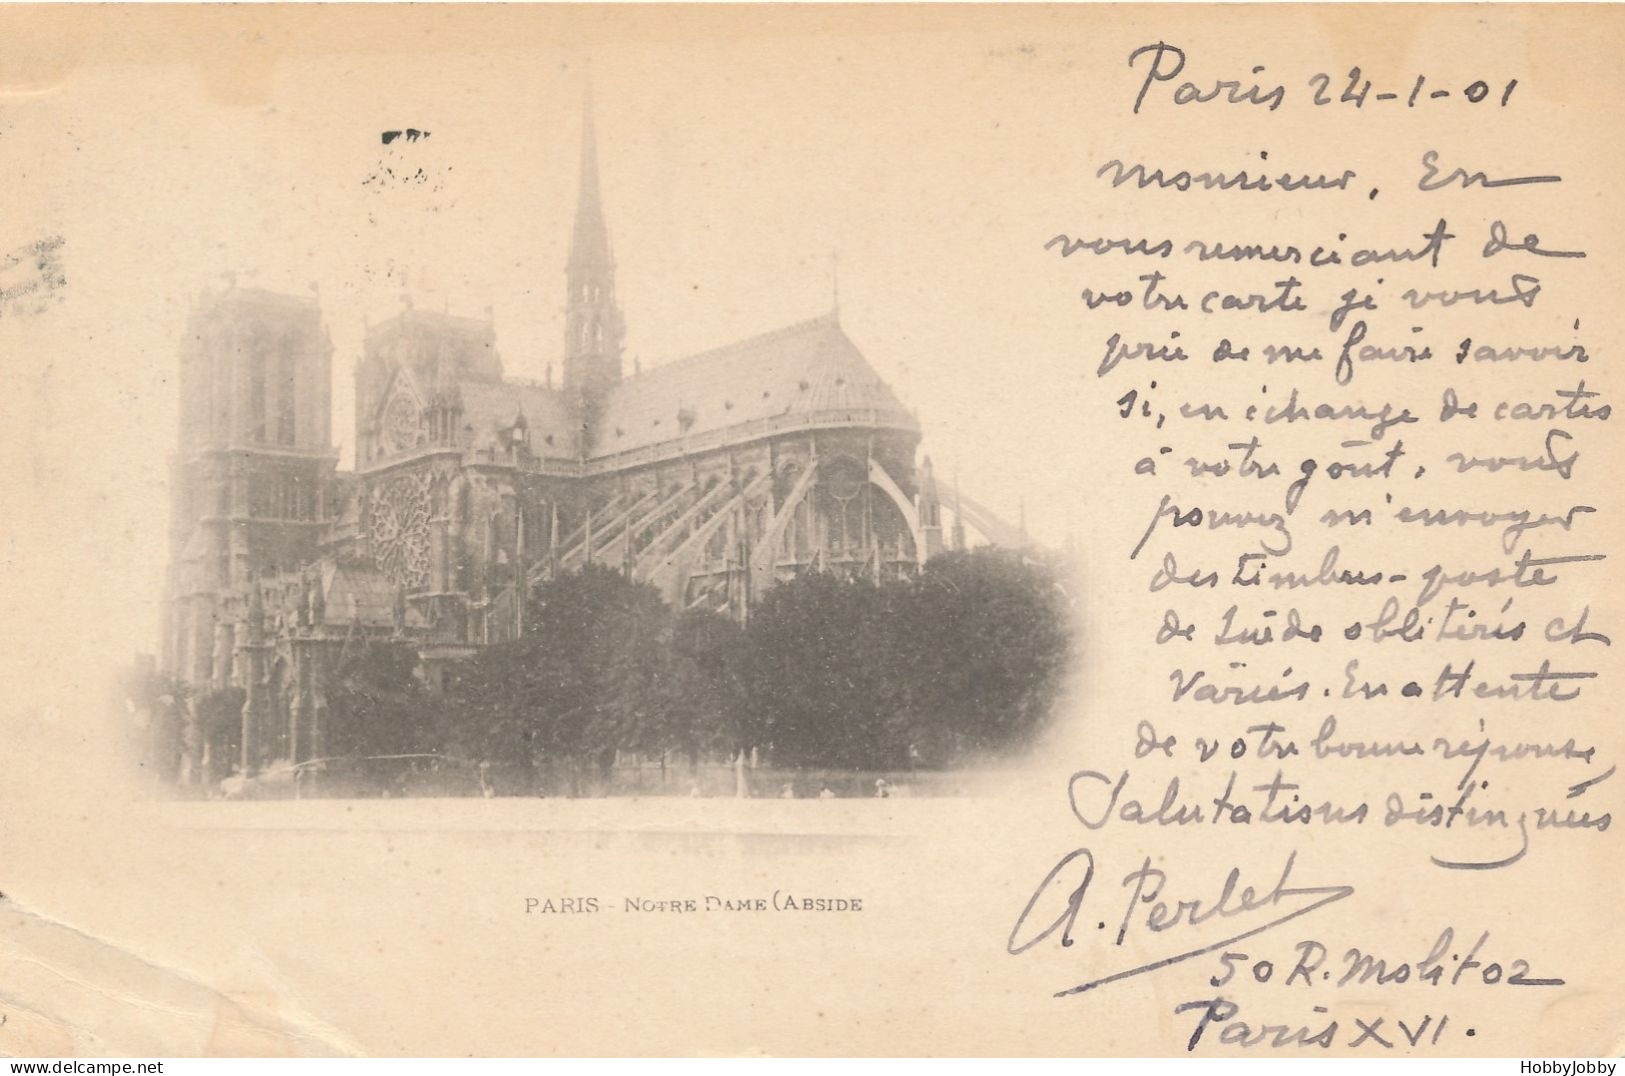 1 PostCard Member J.J.(Jolly Joker P.C-Exchange Society-USA!) Troyes -LL (!) +Notre Dame Paris 24-1-01 to Philocartiste!